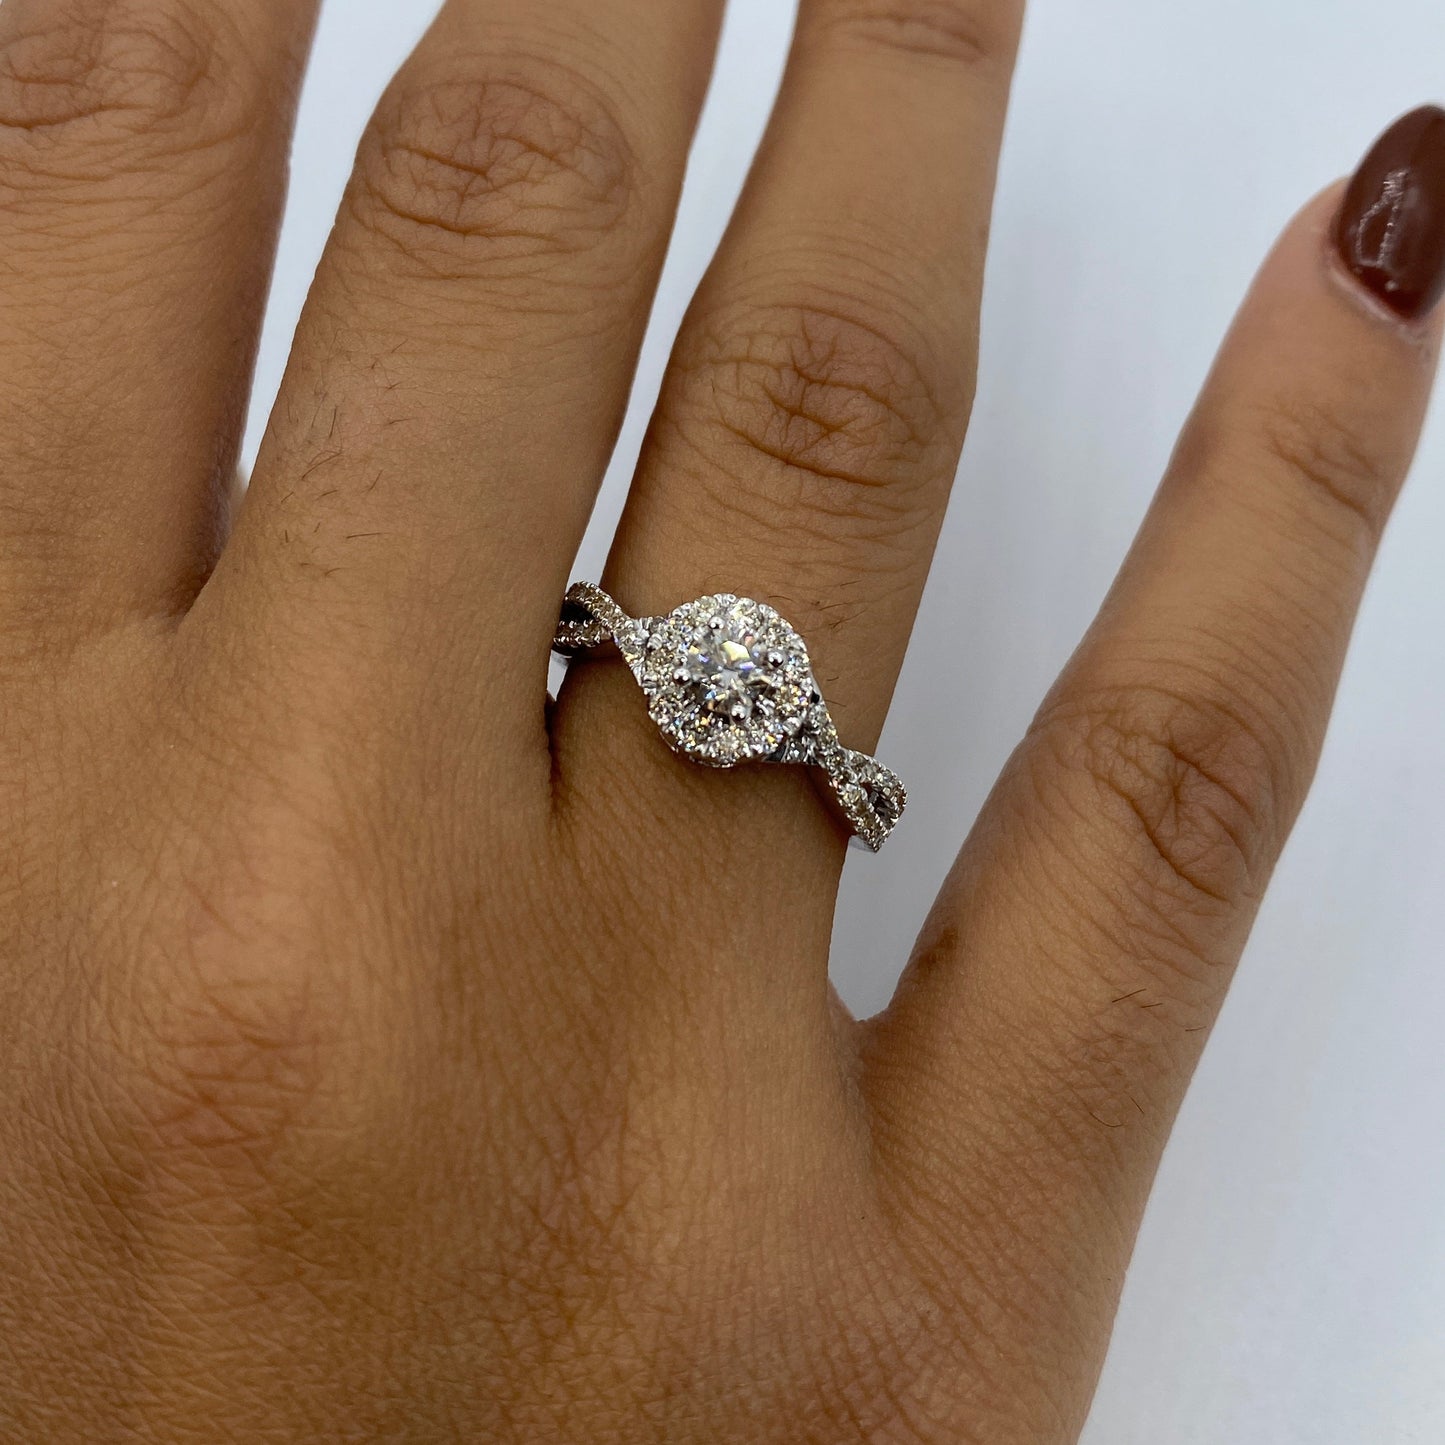 14K Large Center Stone with Infinity Band Diamond Engagement Ring